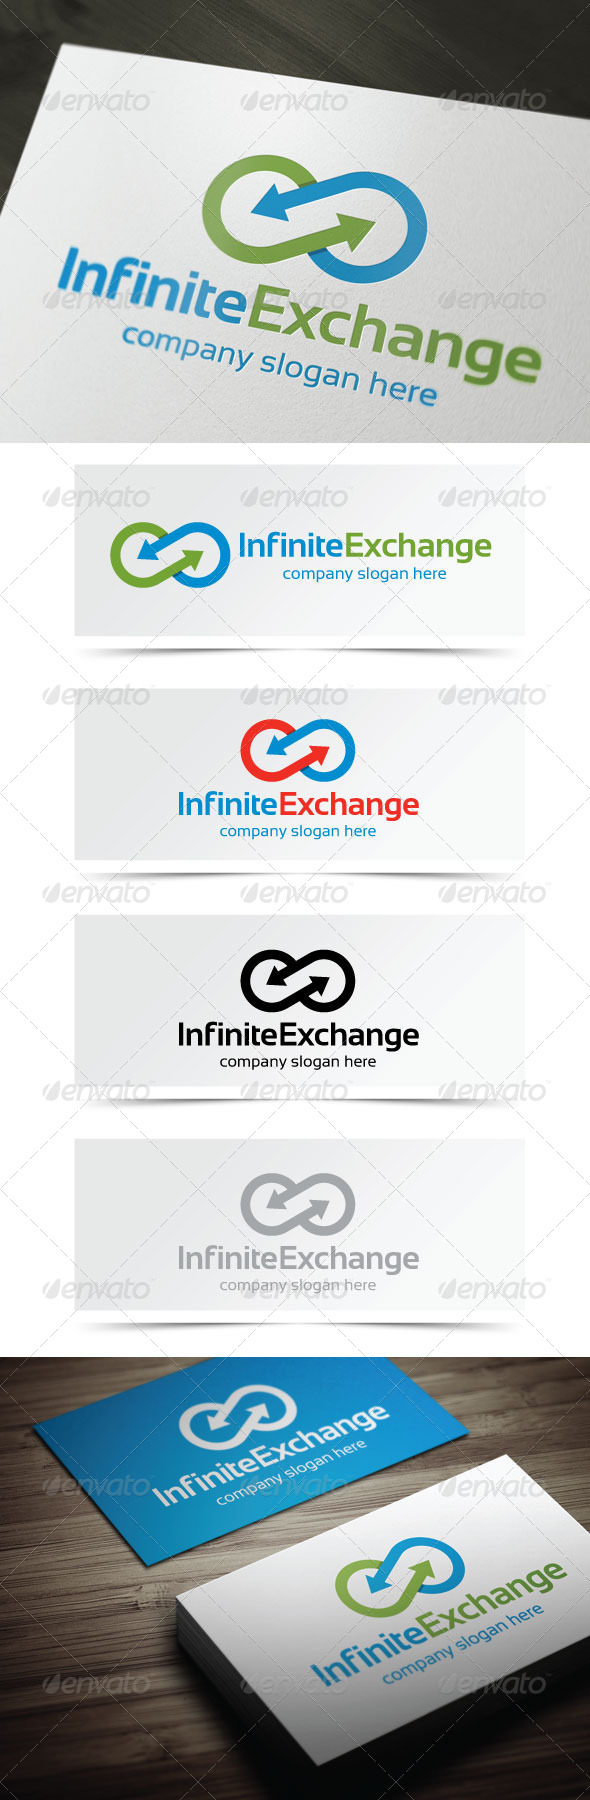 Infinite Exchange